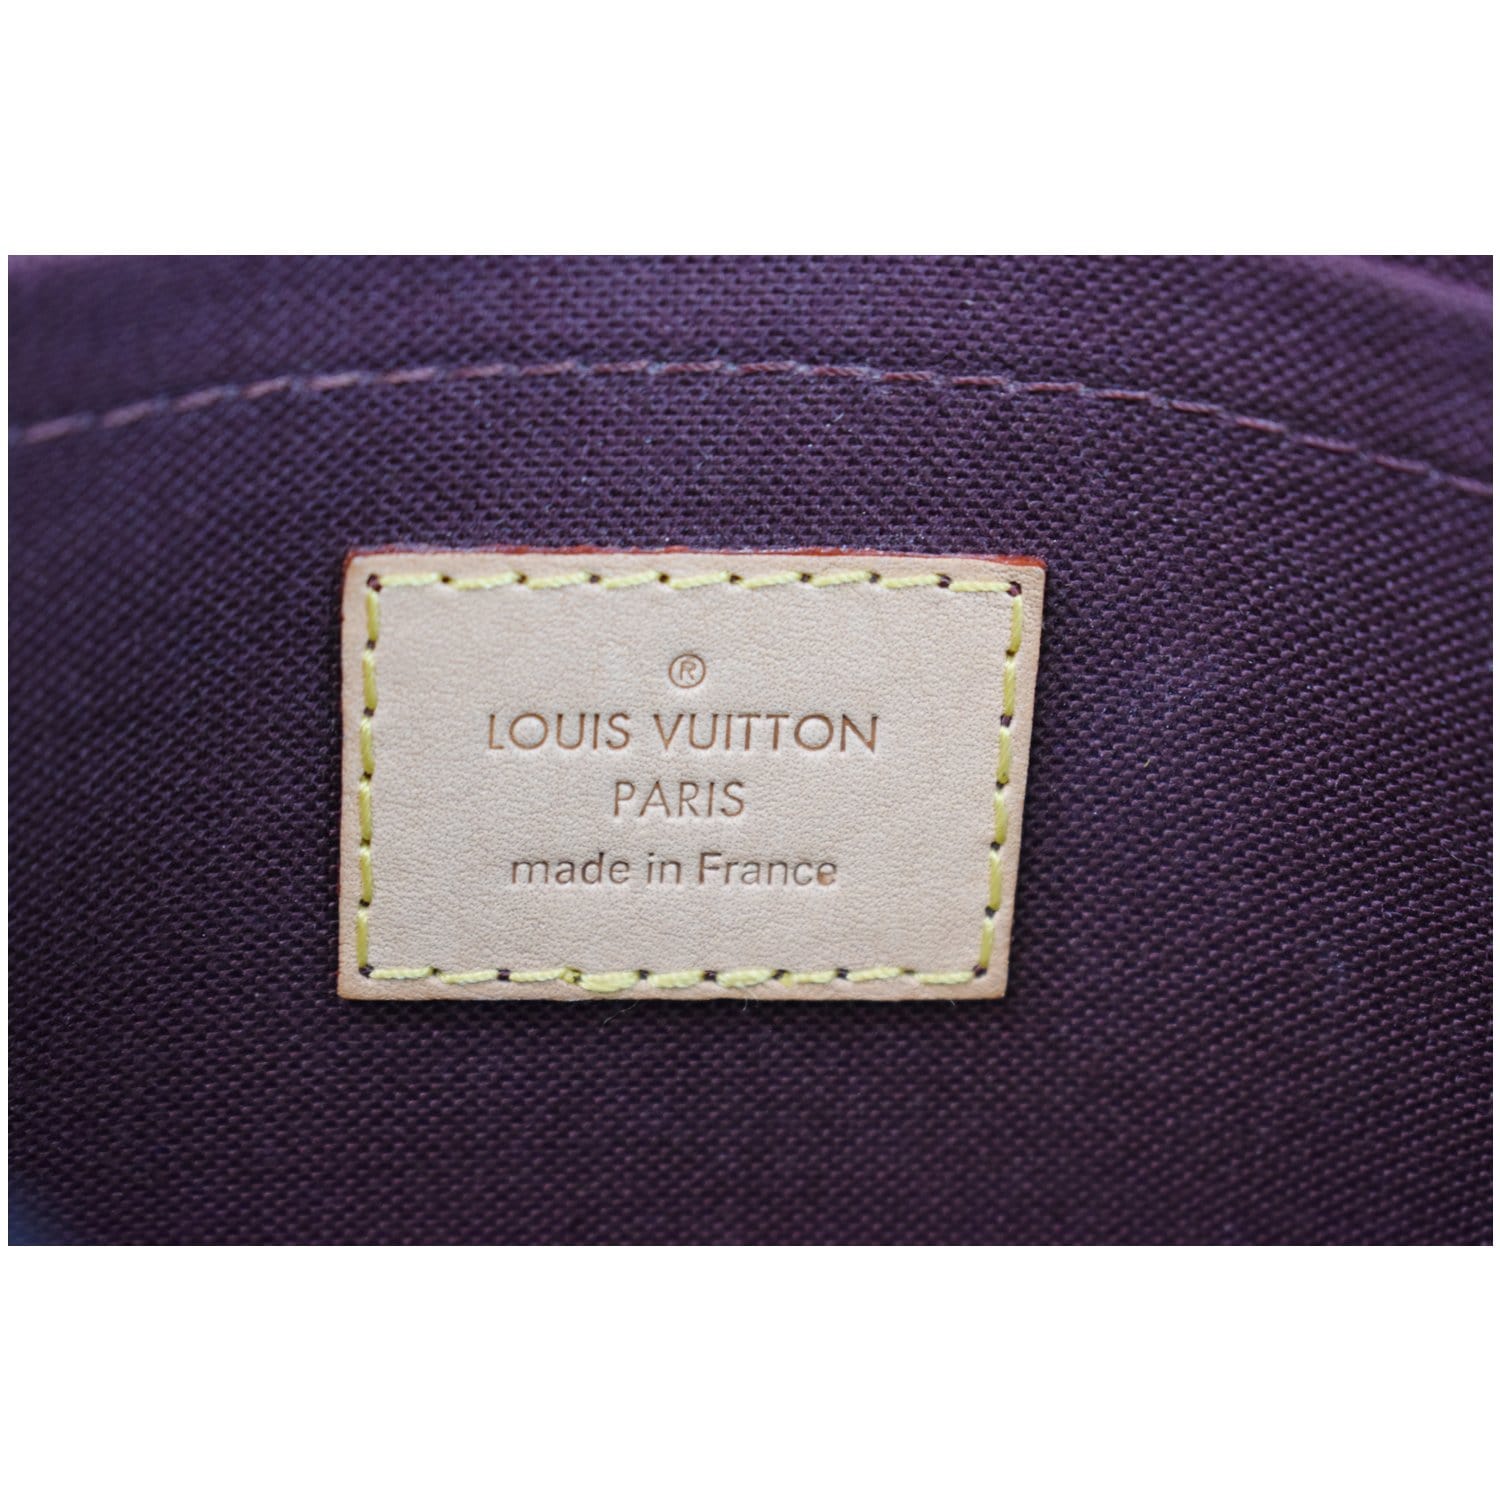 Bolso bandolera Louis Vuitton Saint Cloud en lona Monogram marrón